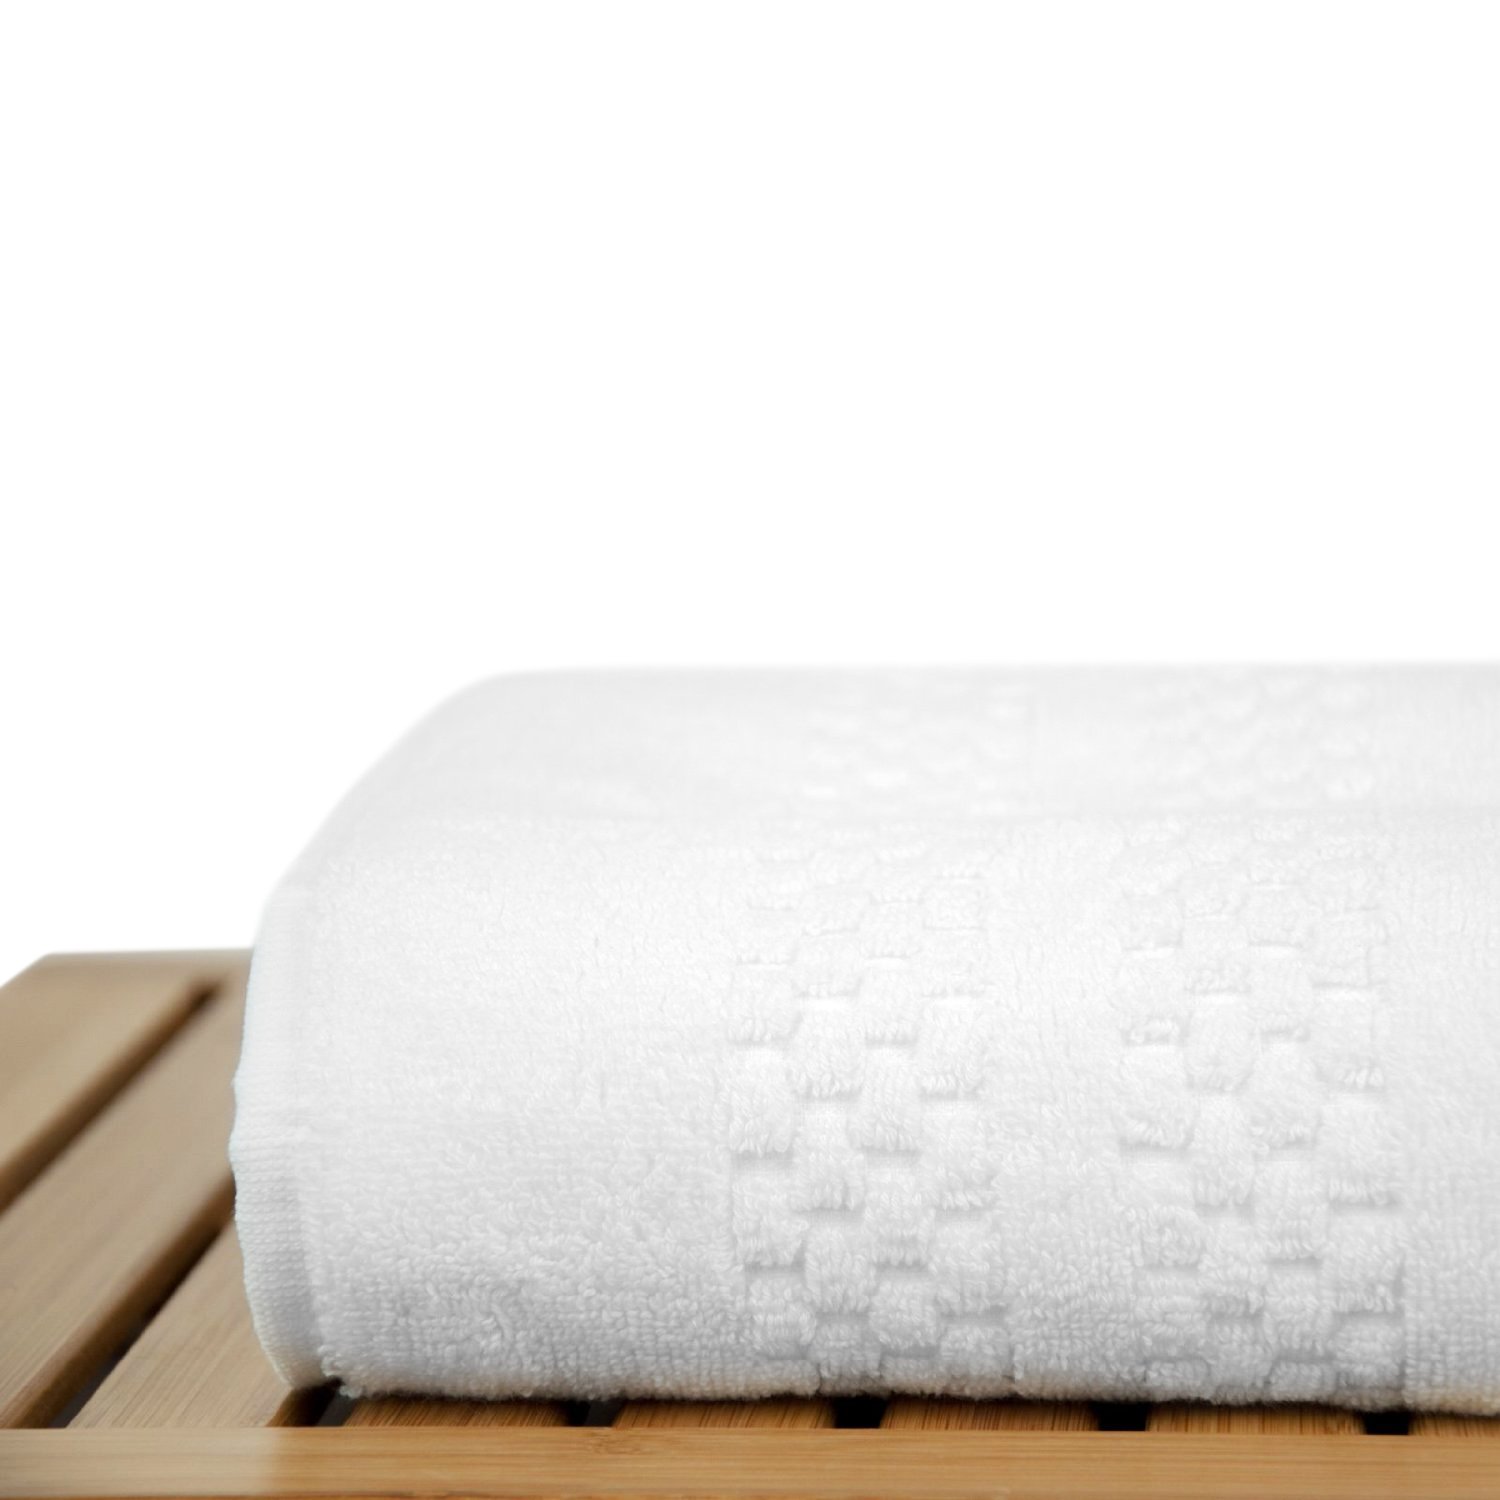 27" x 54" - 17 lbs/doz - %100 Turkish Cotton White Bath Towel - Checkered Border-Robemart.com